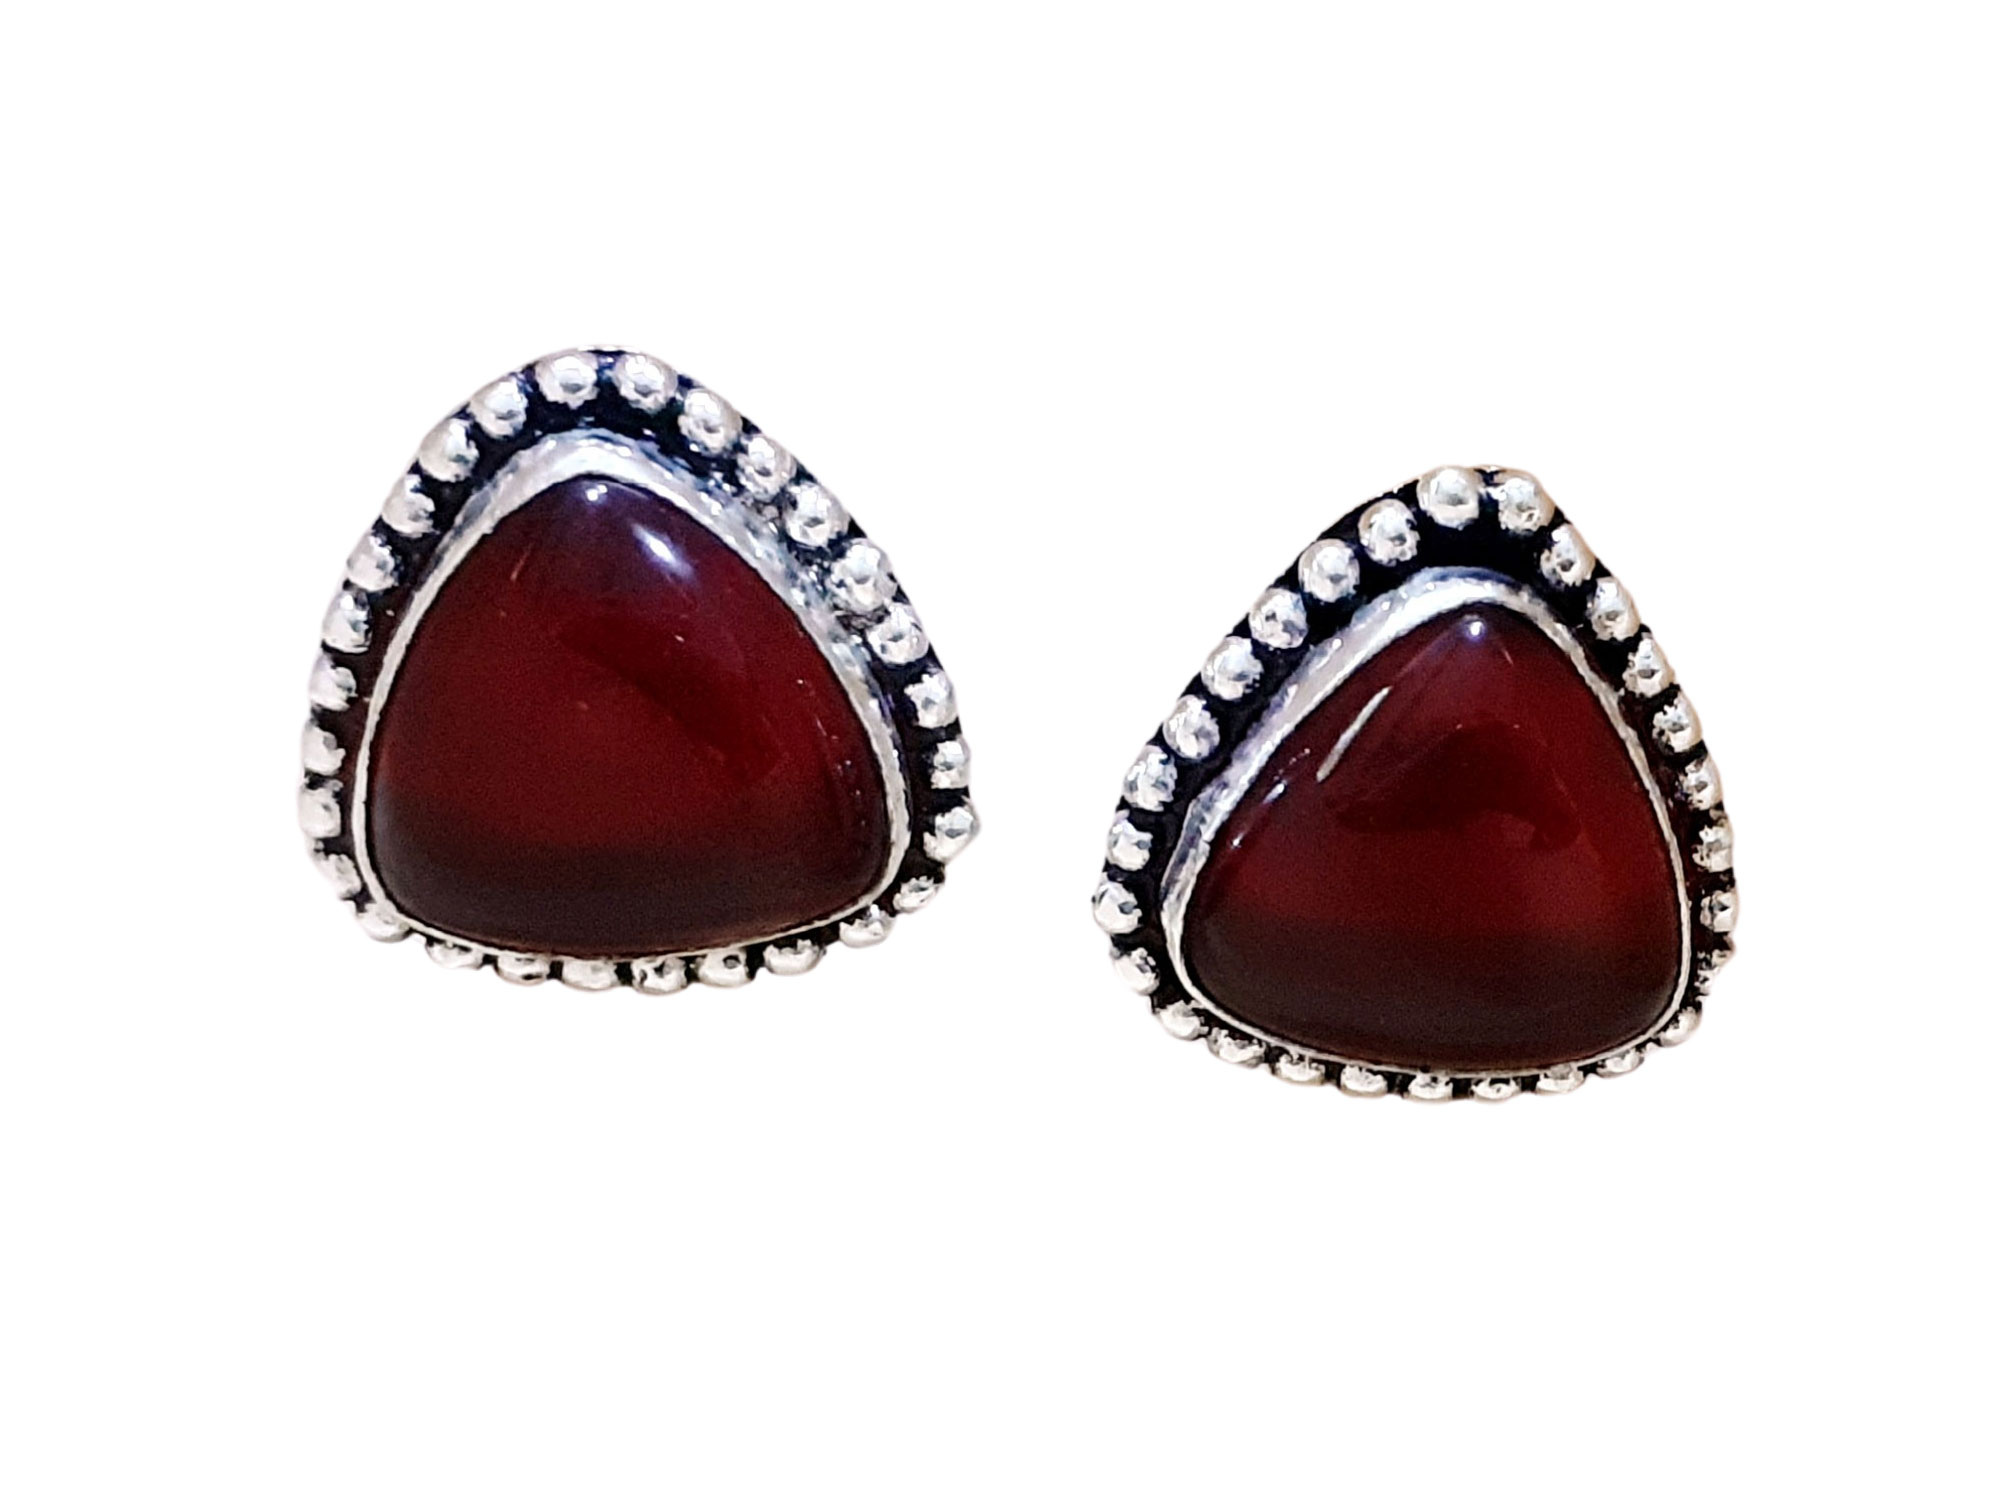 Buy Pure Silver Earrings With Semi Precious Stones - Filgiree Magic Online